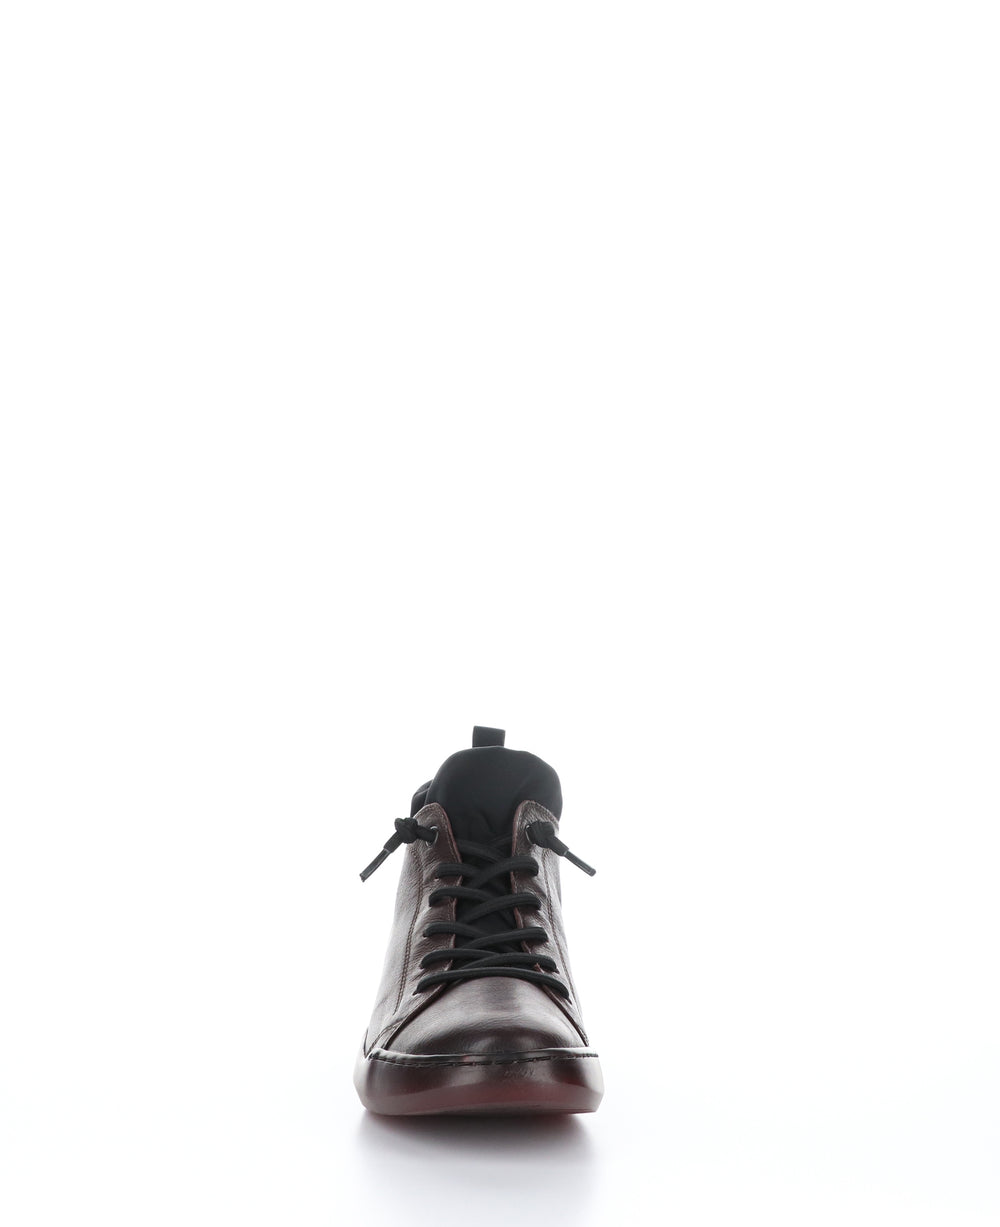 BIEL549SOF Wine/Black Round Toe Shoes